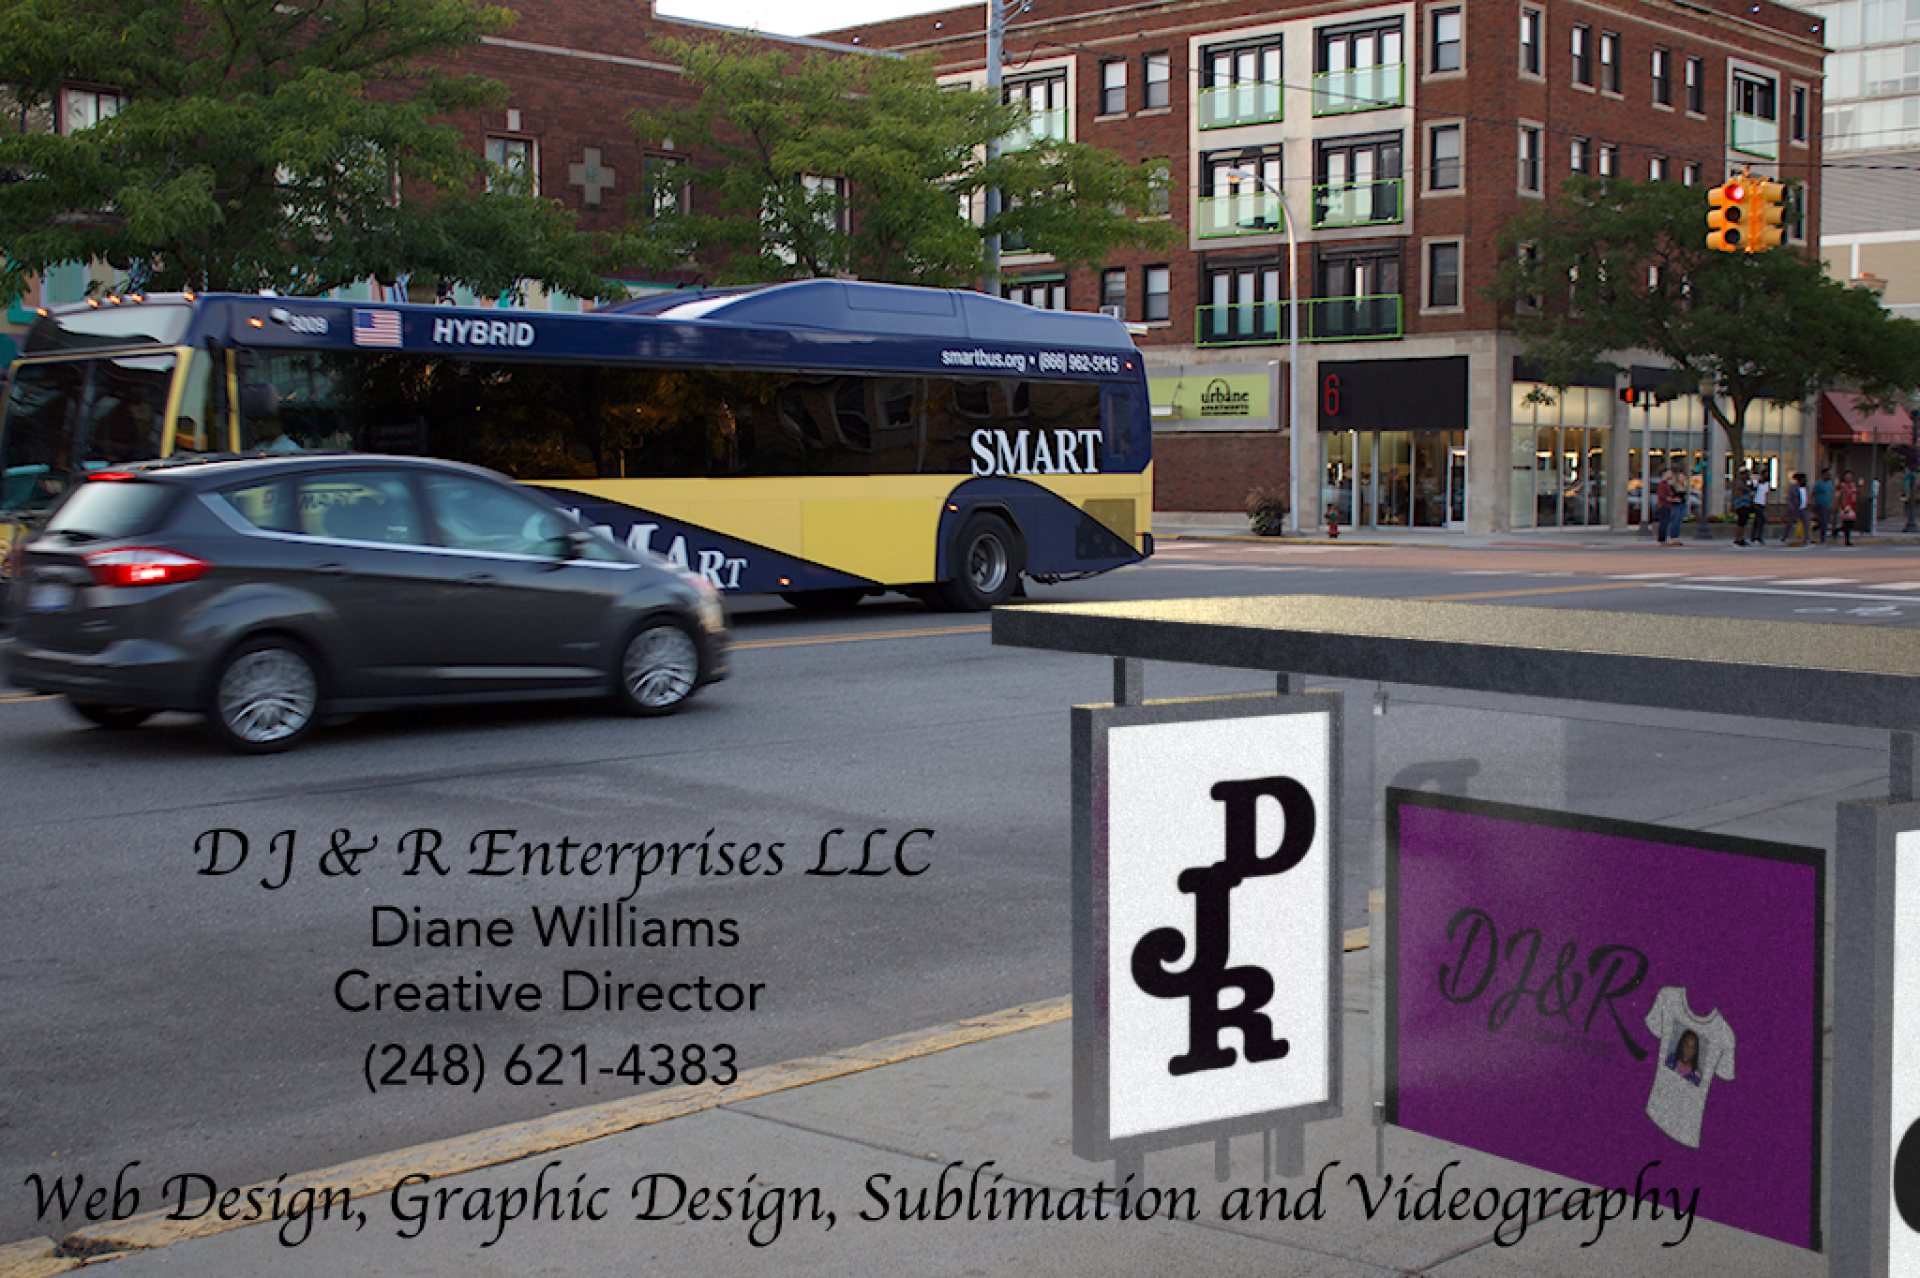 D. J. and R. Enterprises LLC